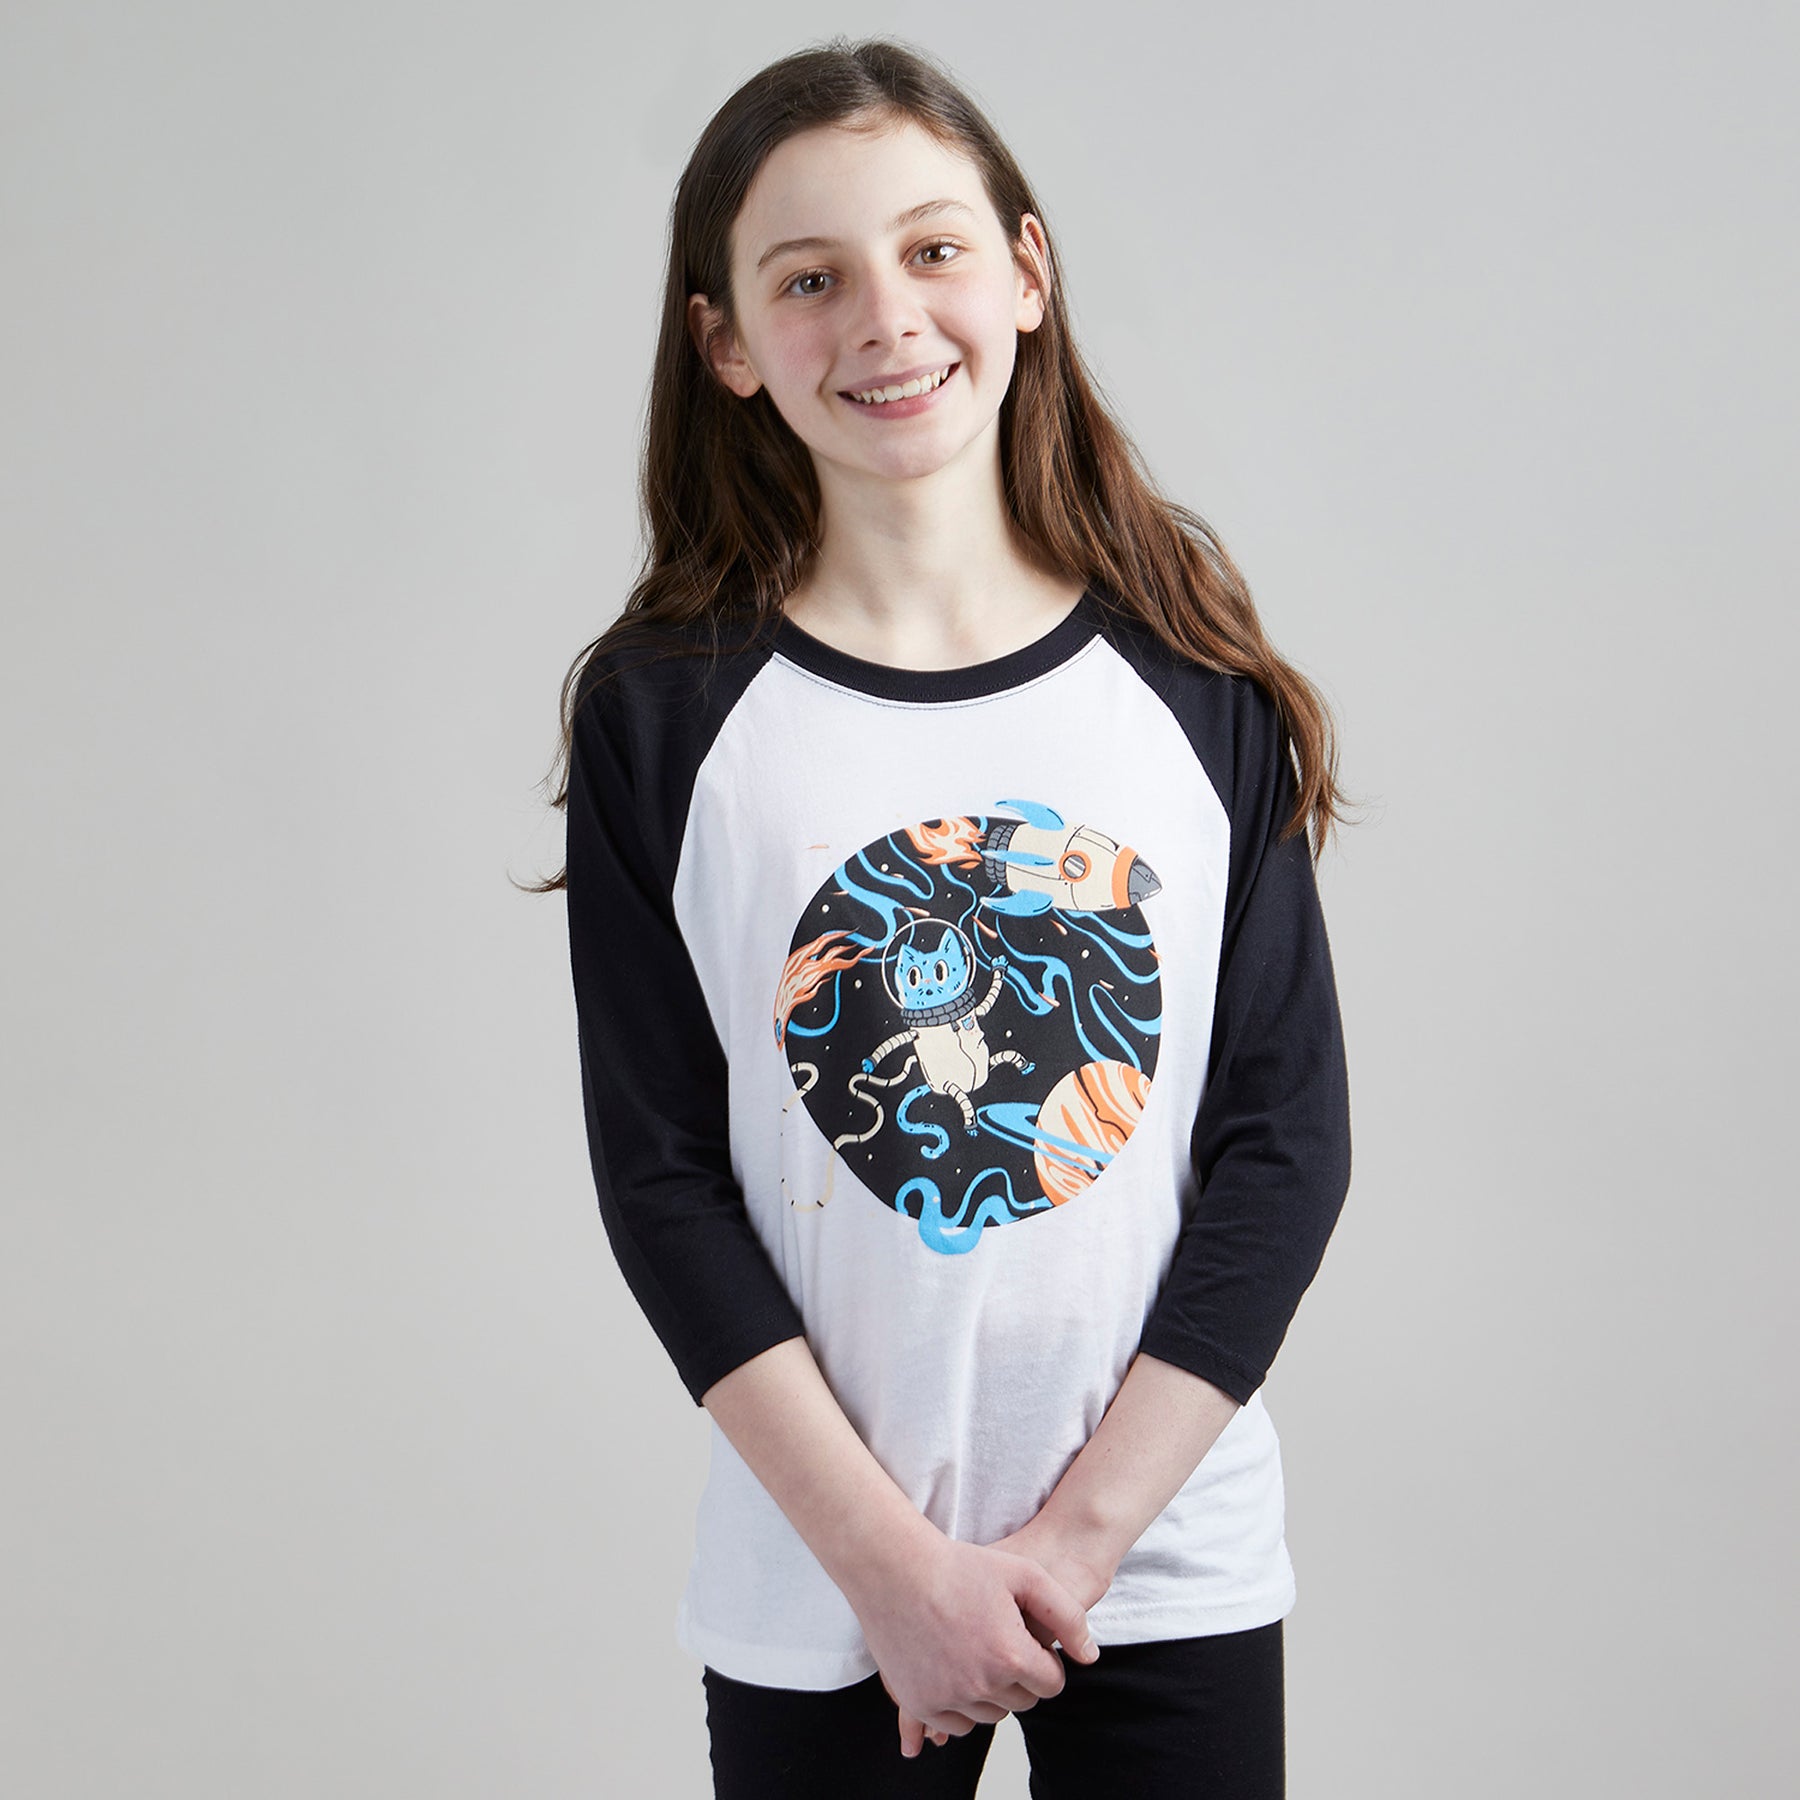 Space Cat Raglan – Triblend Orchard Apparel T-Shirt. length Kids Unisex White/Black 3/4 Street